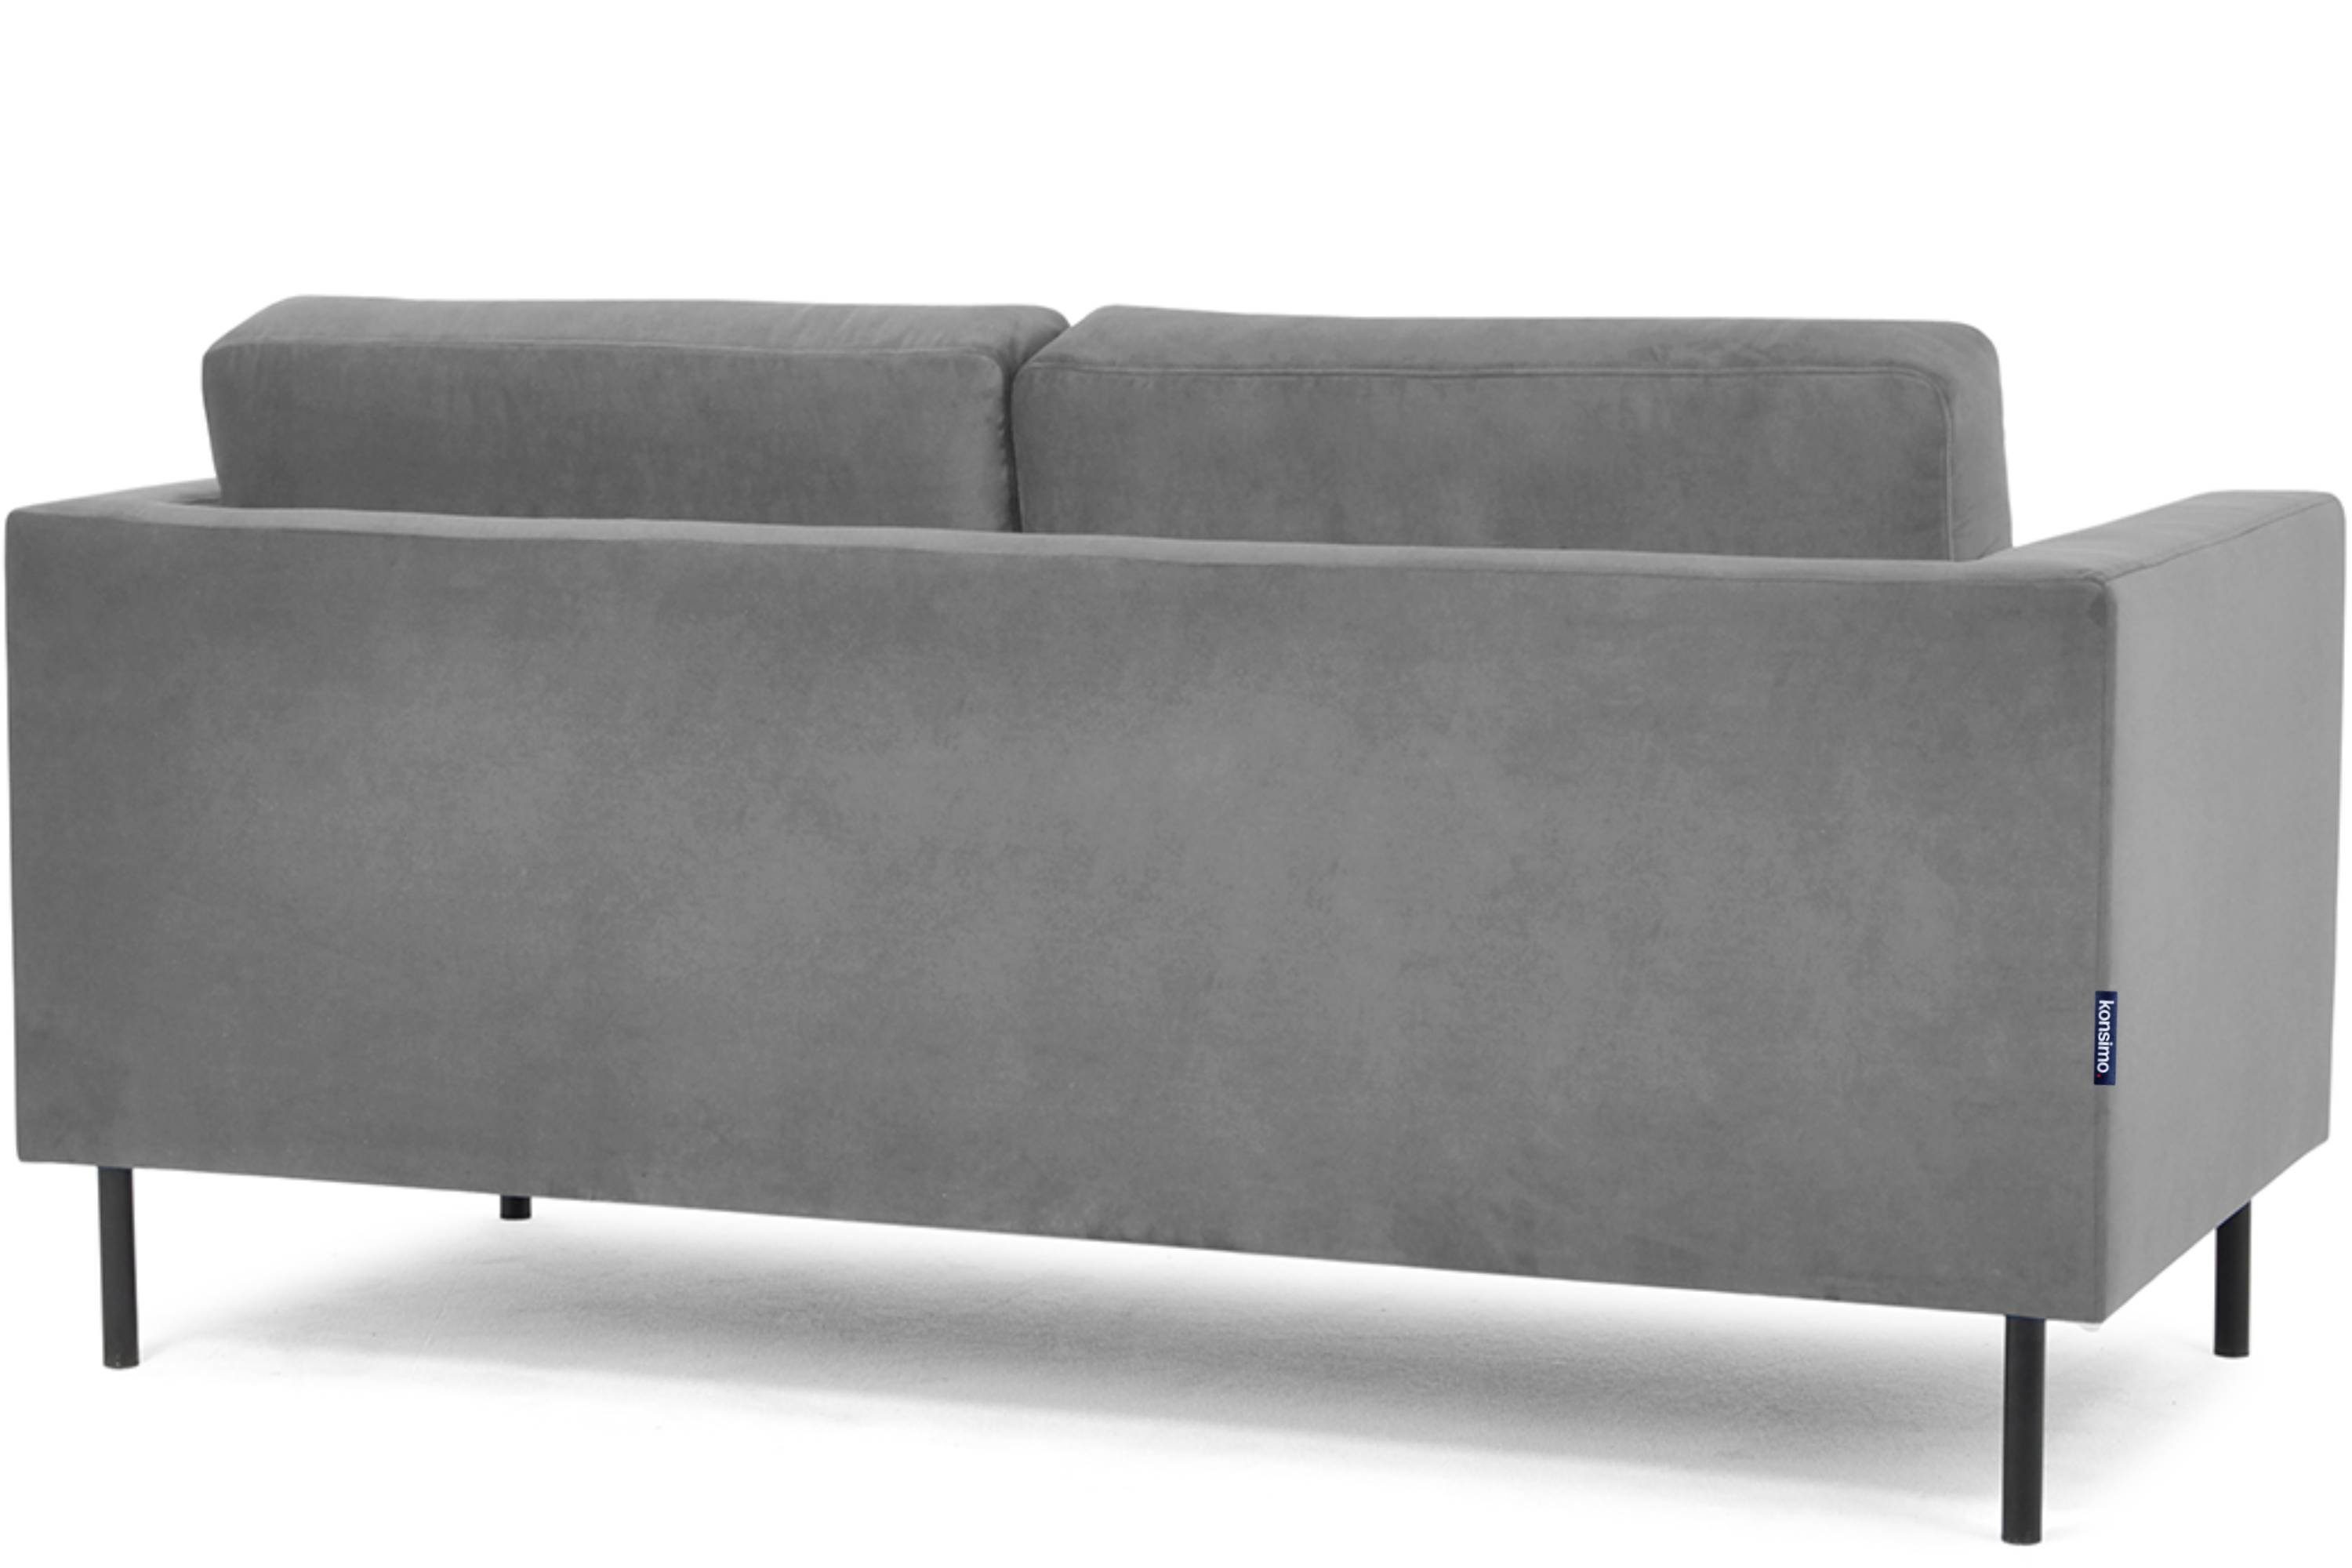 Konsimo 2-Sitzer TOZZI Sofa 2 Personen, | Beine, grau | grau grau Design universelles hohe